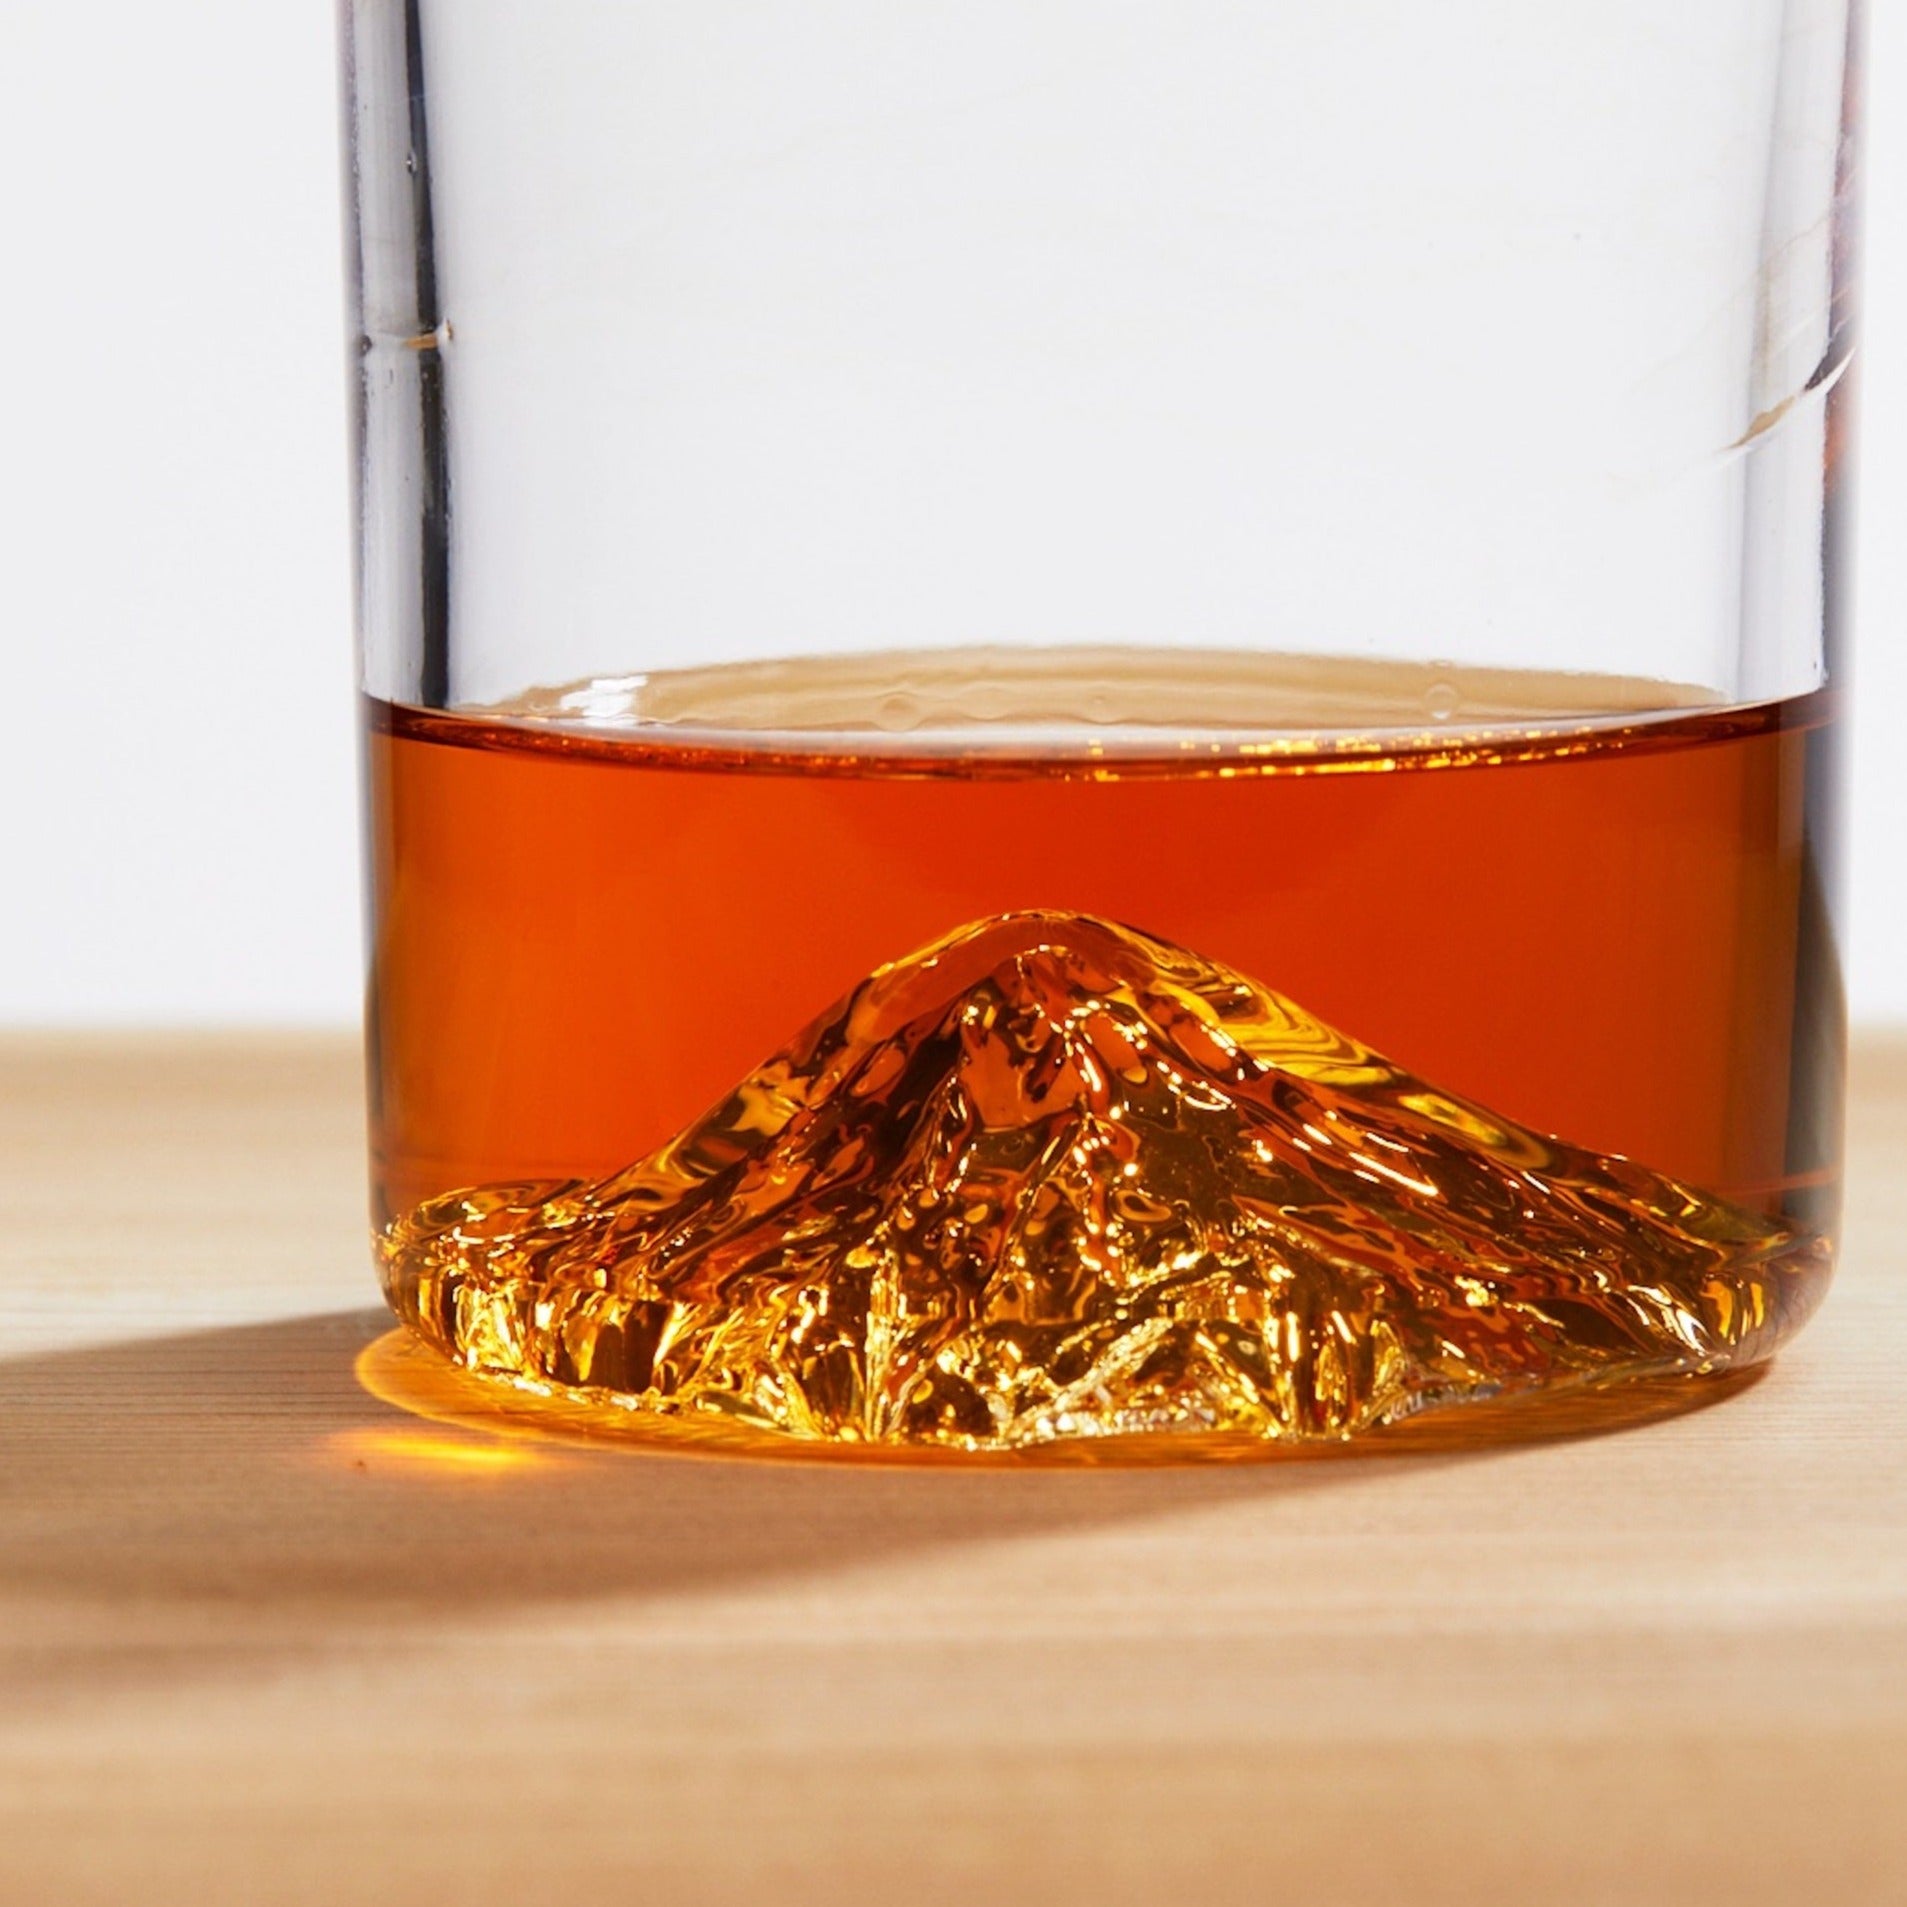 The Fourteener Mountain Whisky Glass